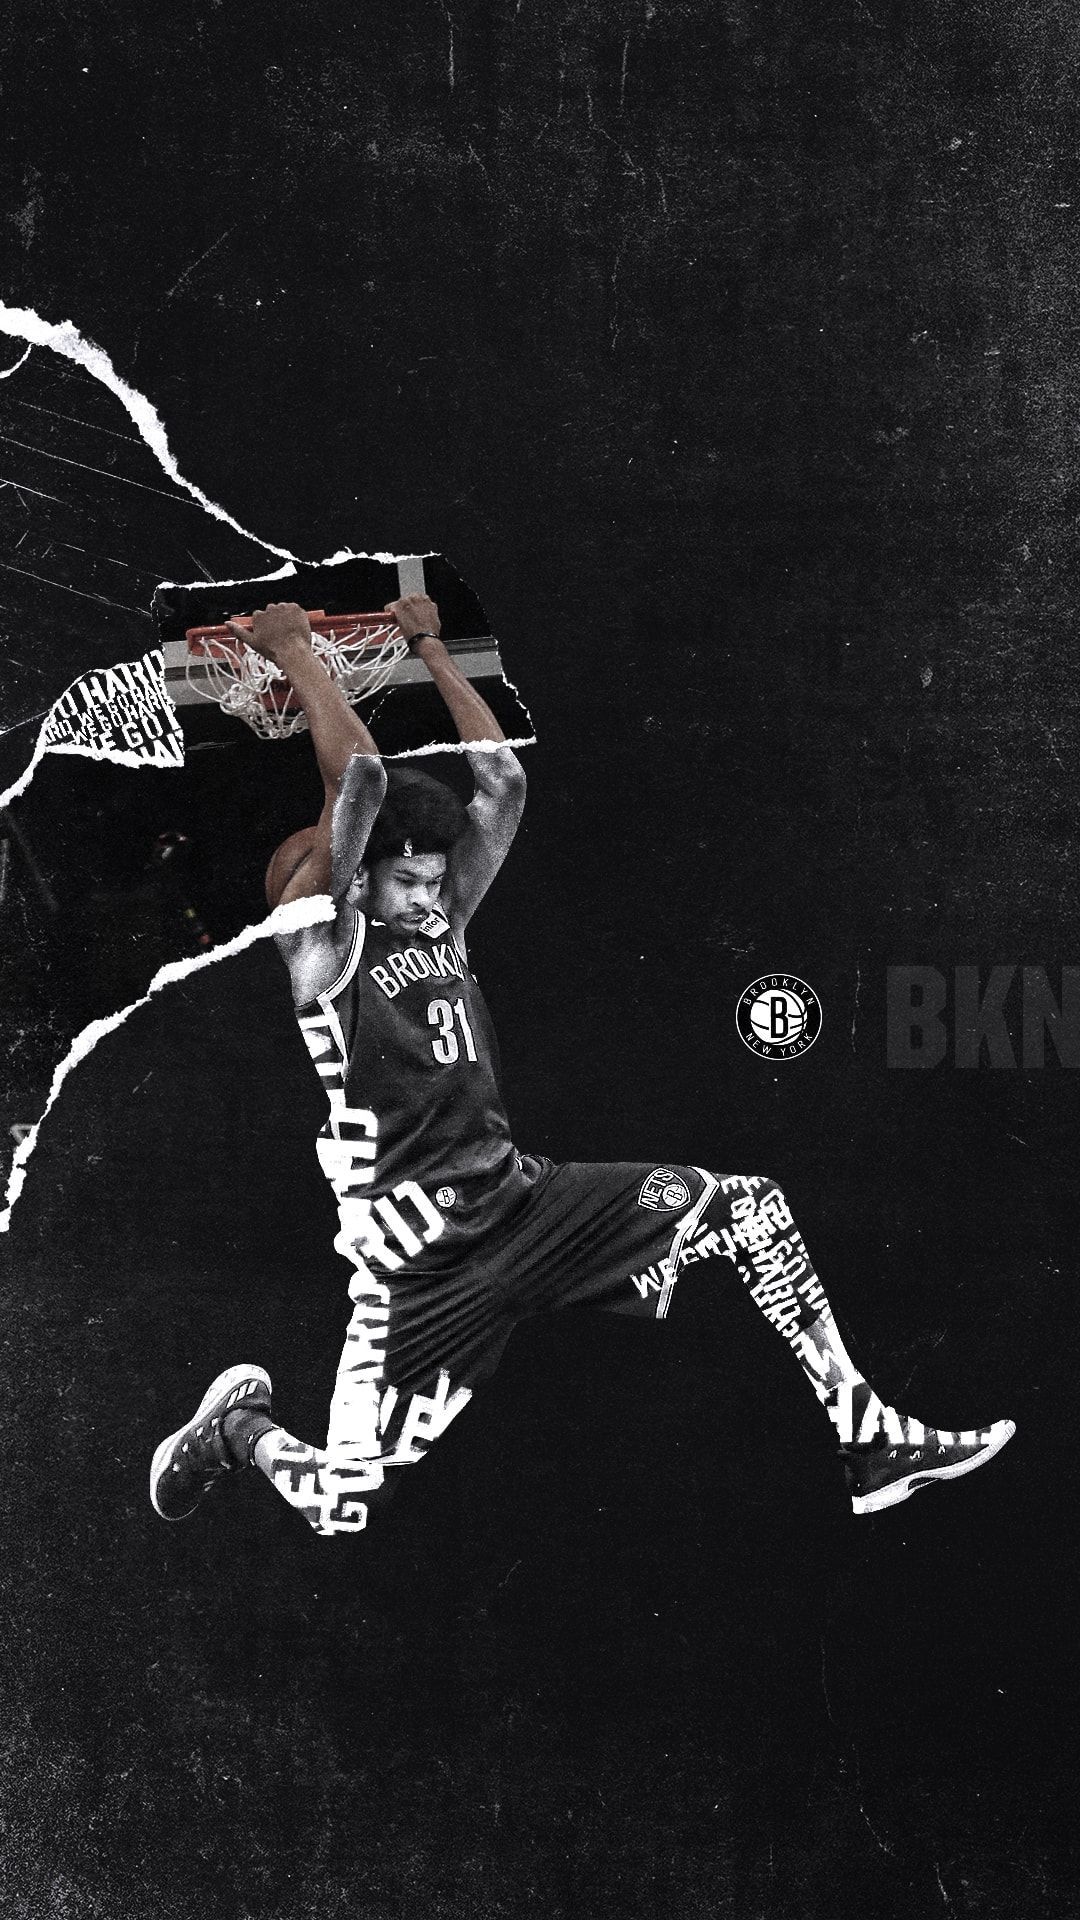 iPhone Wallpaper HD Brooklyn Nets Basketball Wallpaper. Brooklyn nets, Basketball wallpaper, Basketball wallpaper hd